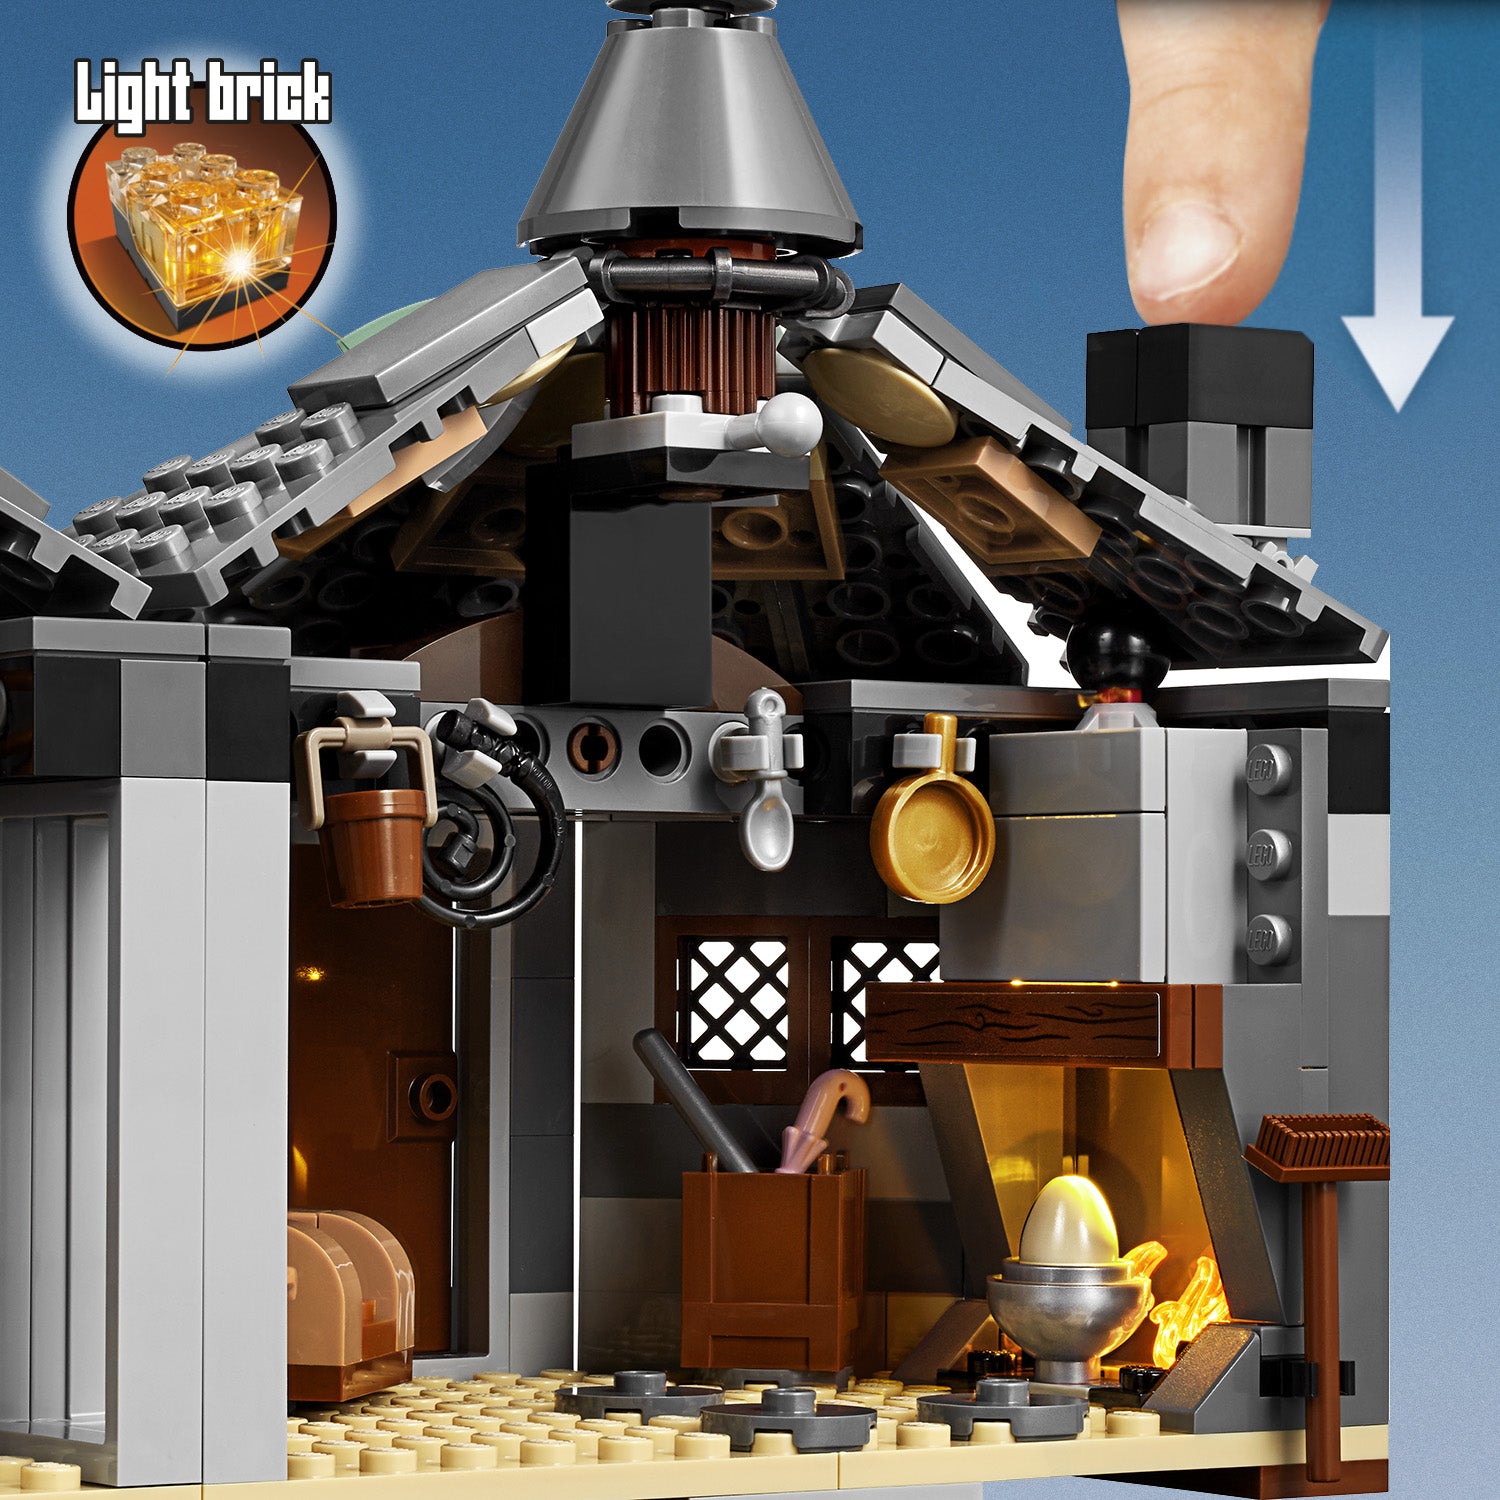 LEGO® Harry Potter Hagrid’s Hut Playset 75947 Default Title